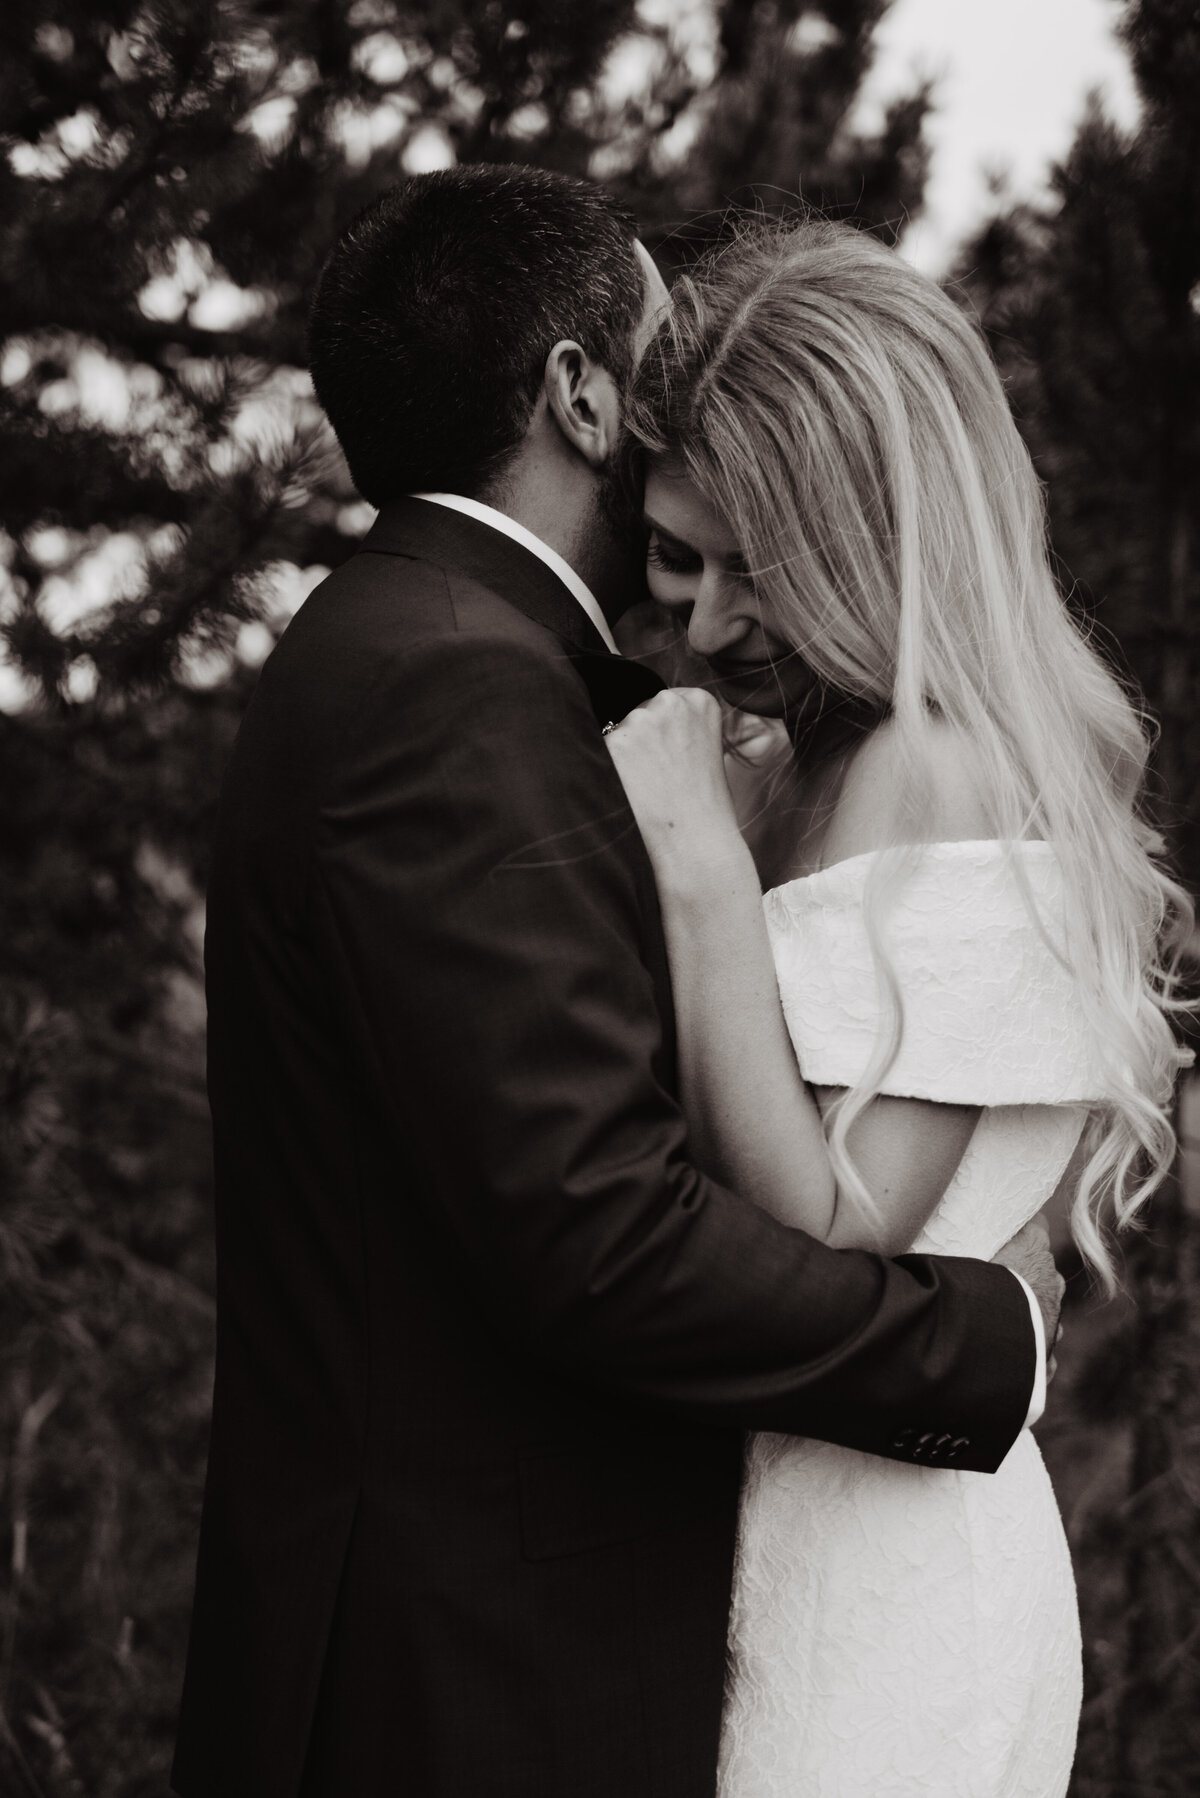 Photographers Jackson Hole capture groom snuggling bride